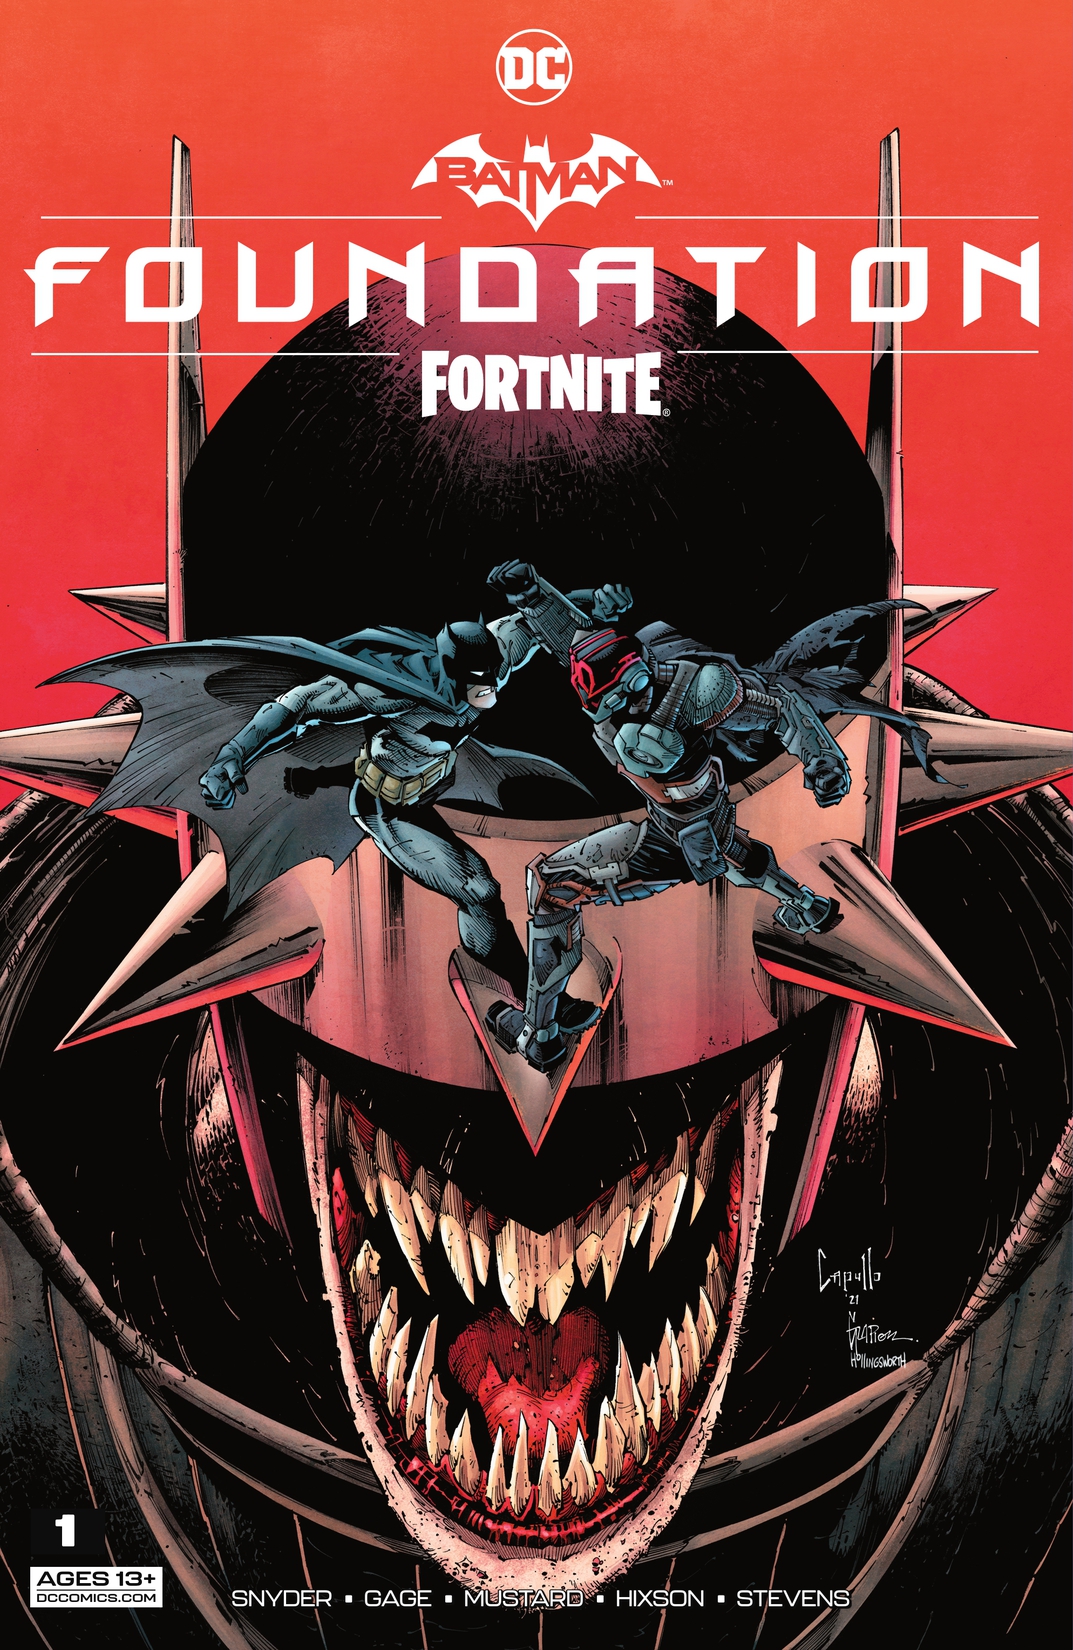 Batman/Fortnite: Foundation #1 preview images